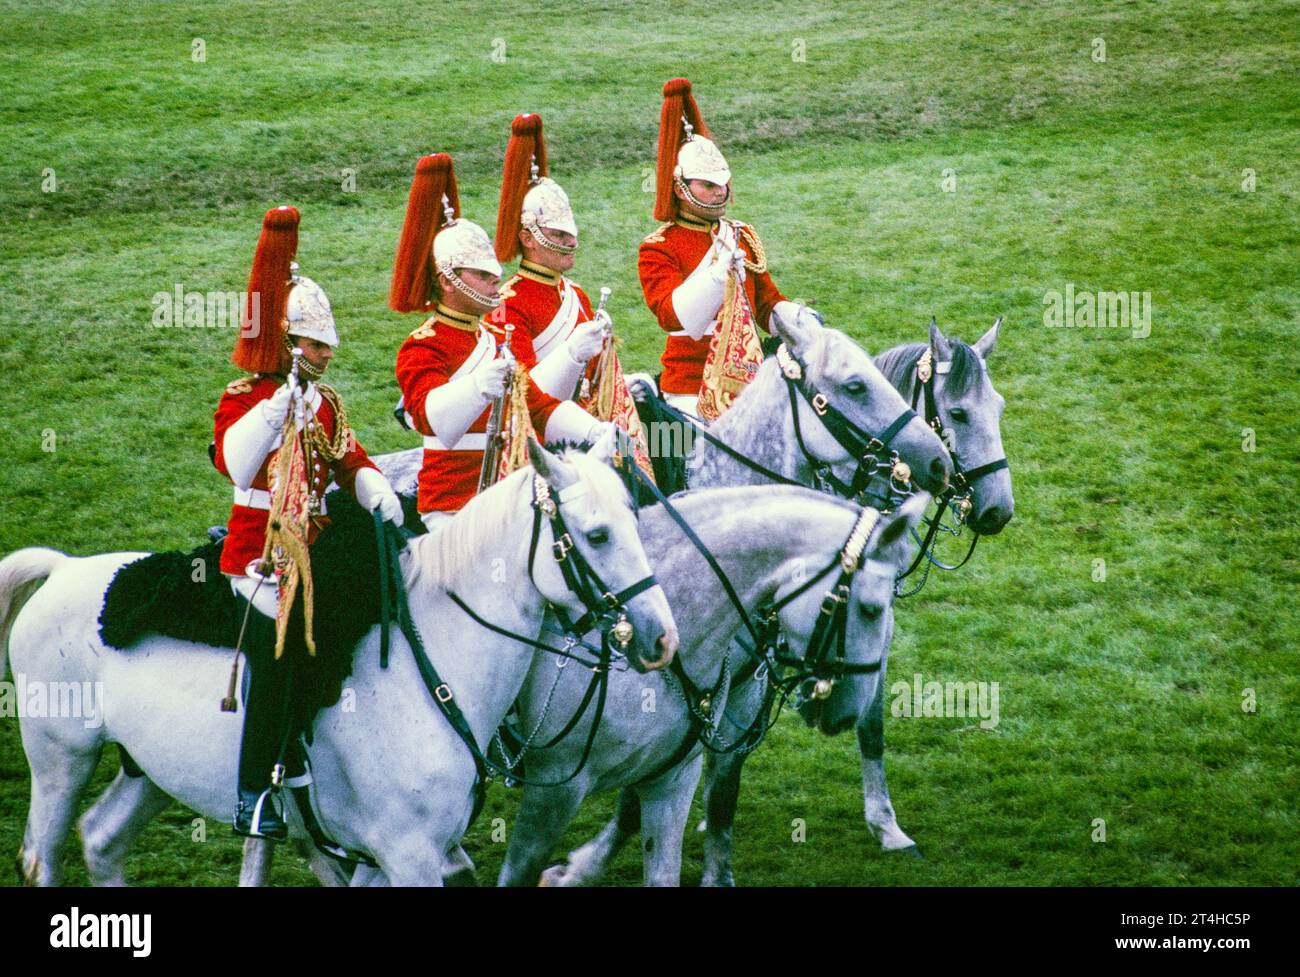 Jinetes con regalia real, espectáculo de la Royal Agricultural Society of England, The Royal Show, Stoneleigh, Warwickshire, Inglaterra, REINO UNIDO 1967 Foto de stock